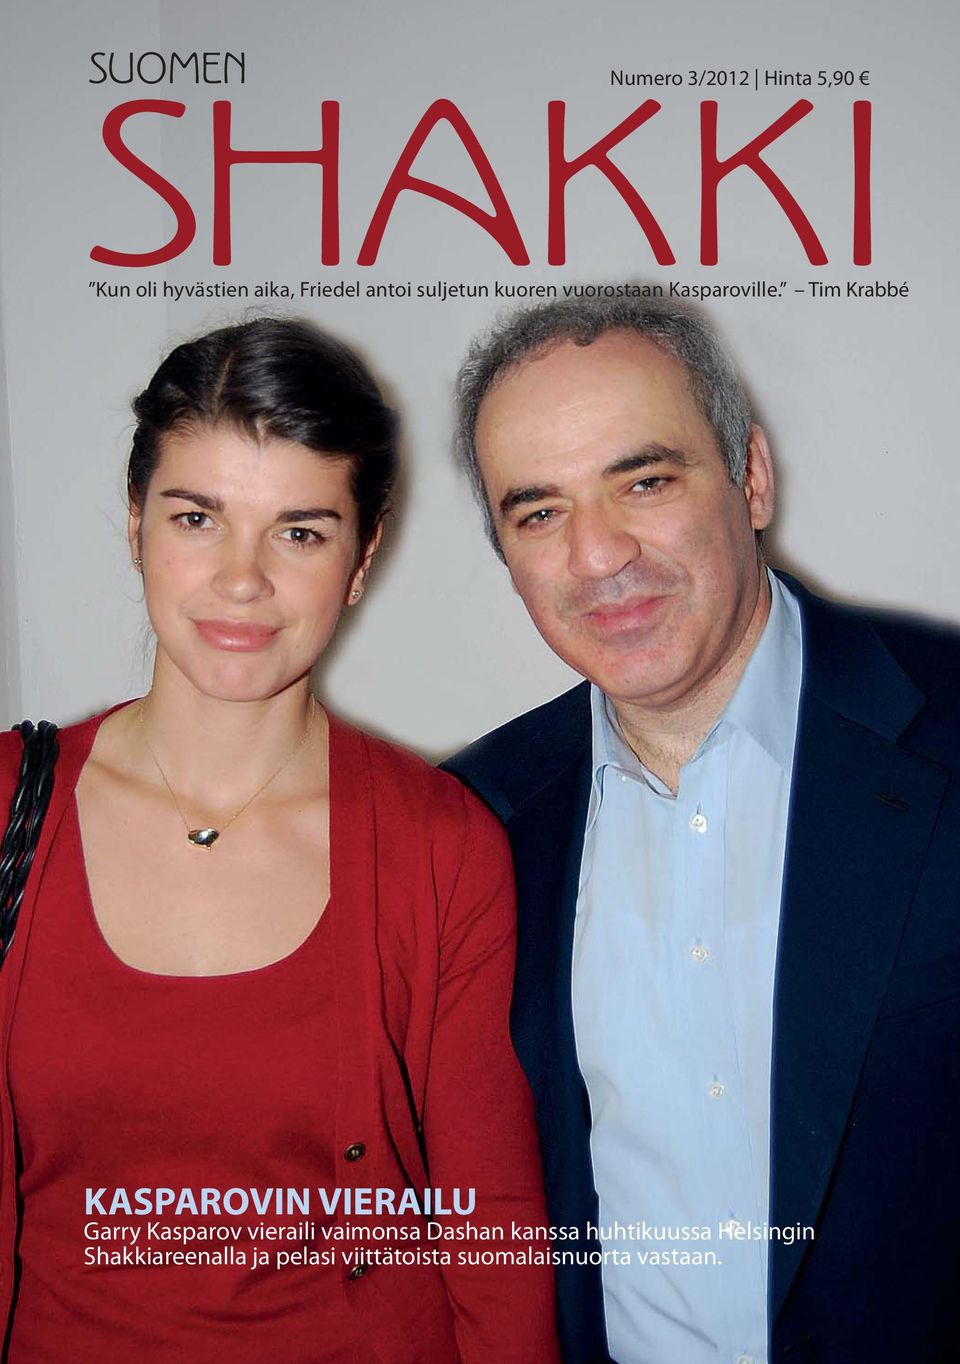 Tim Krabbé KASPAROVIN VIERAILU Garry Kasparov vieraili vaimonsa Dashan